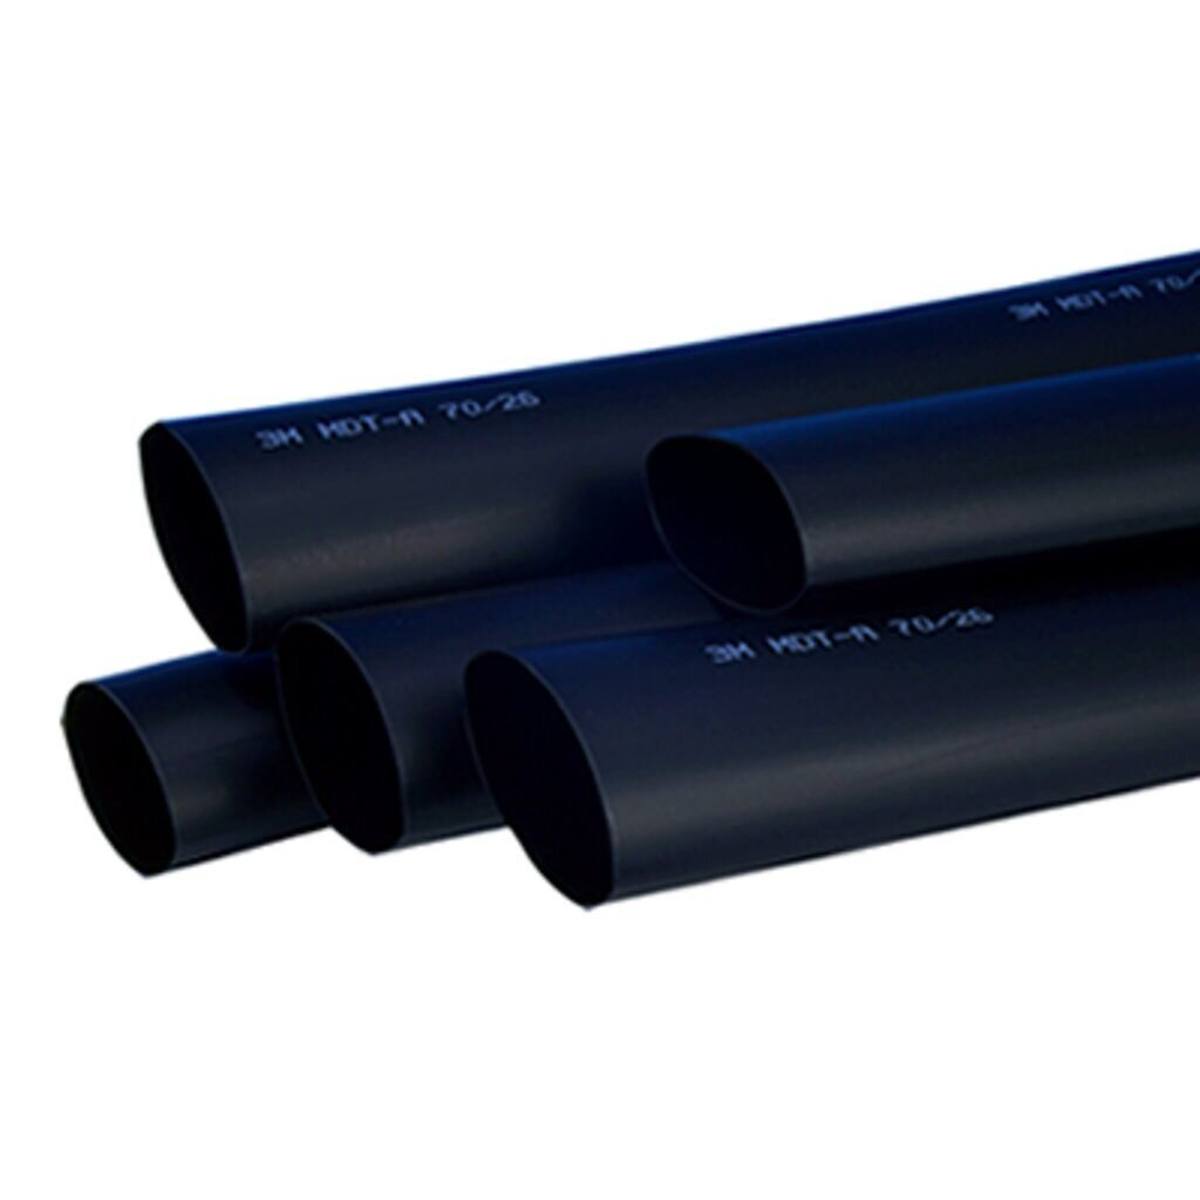 3M MDT-A Medium-wall heat-shrink tubing with adhesive, black, 70/26 mm, 1 m